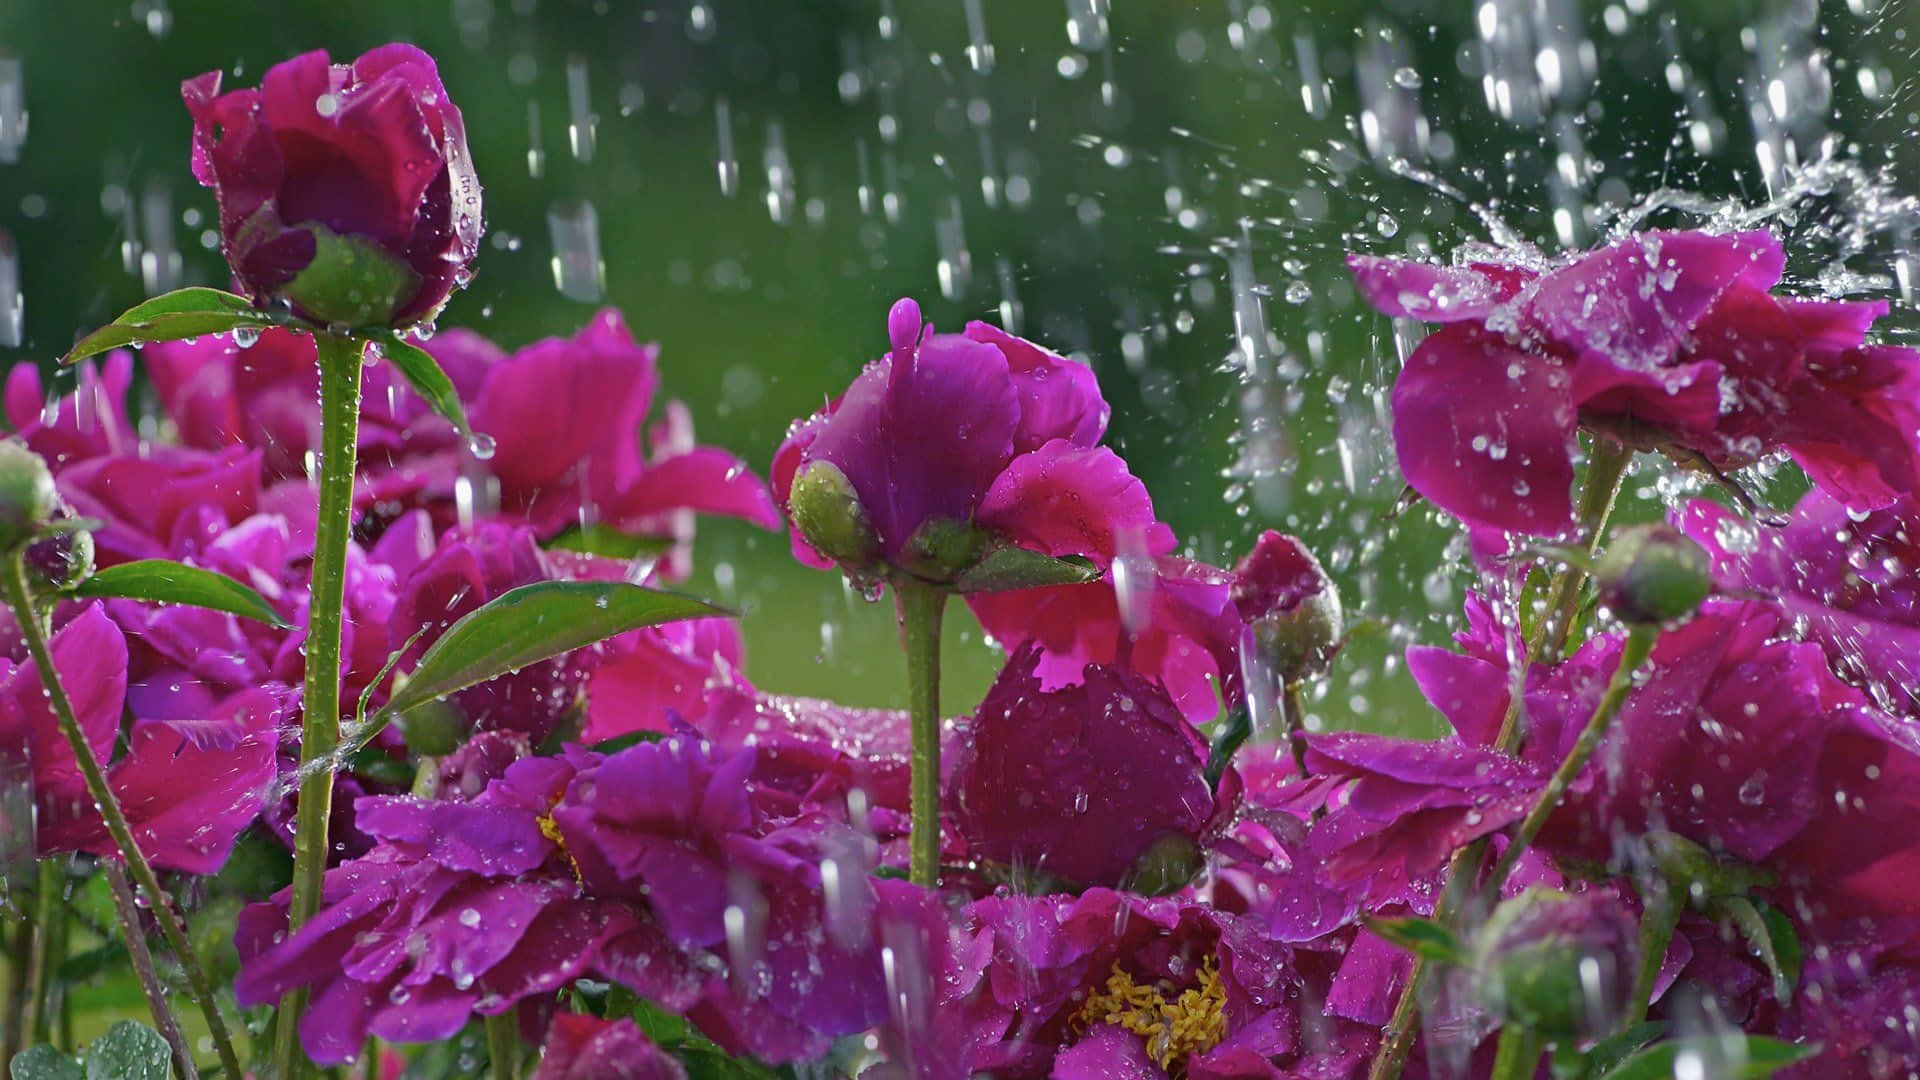 Dancing In The Rain: A Serene Spring Shower Wallpaper